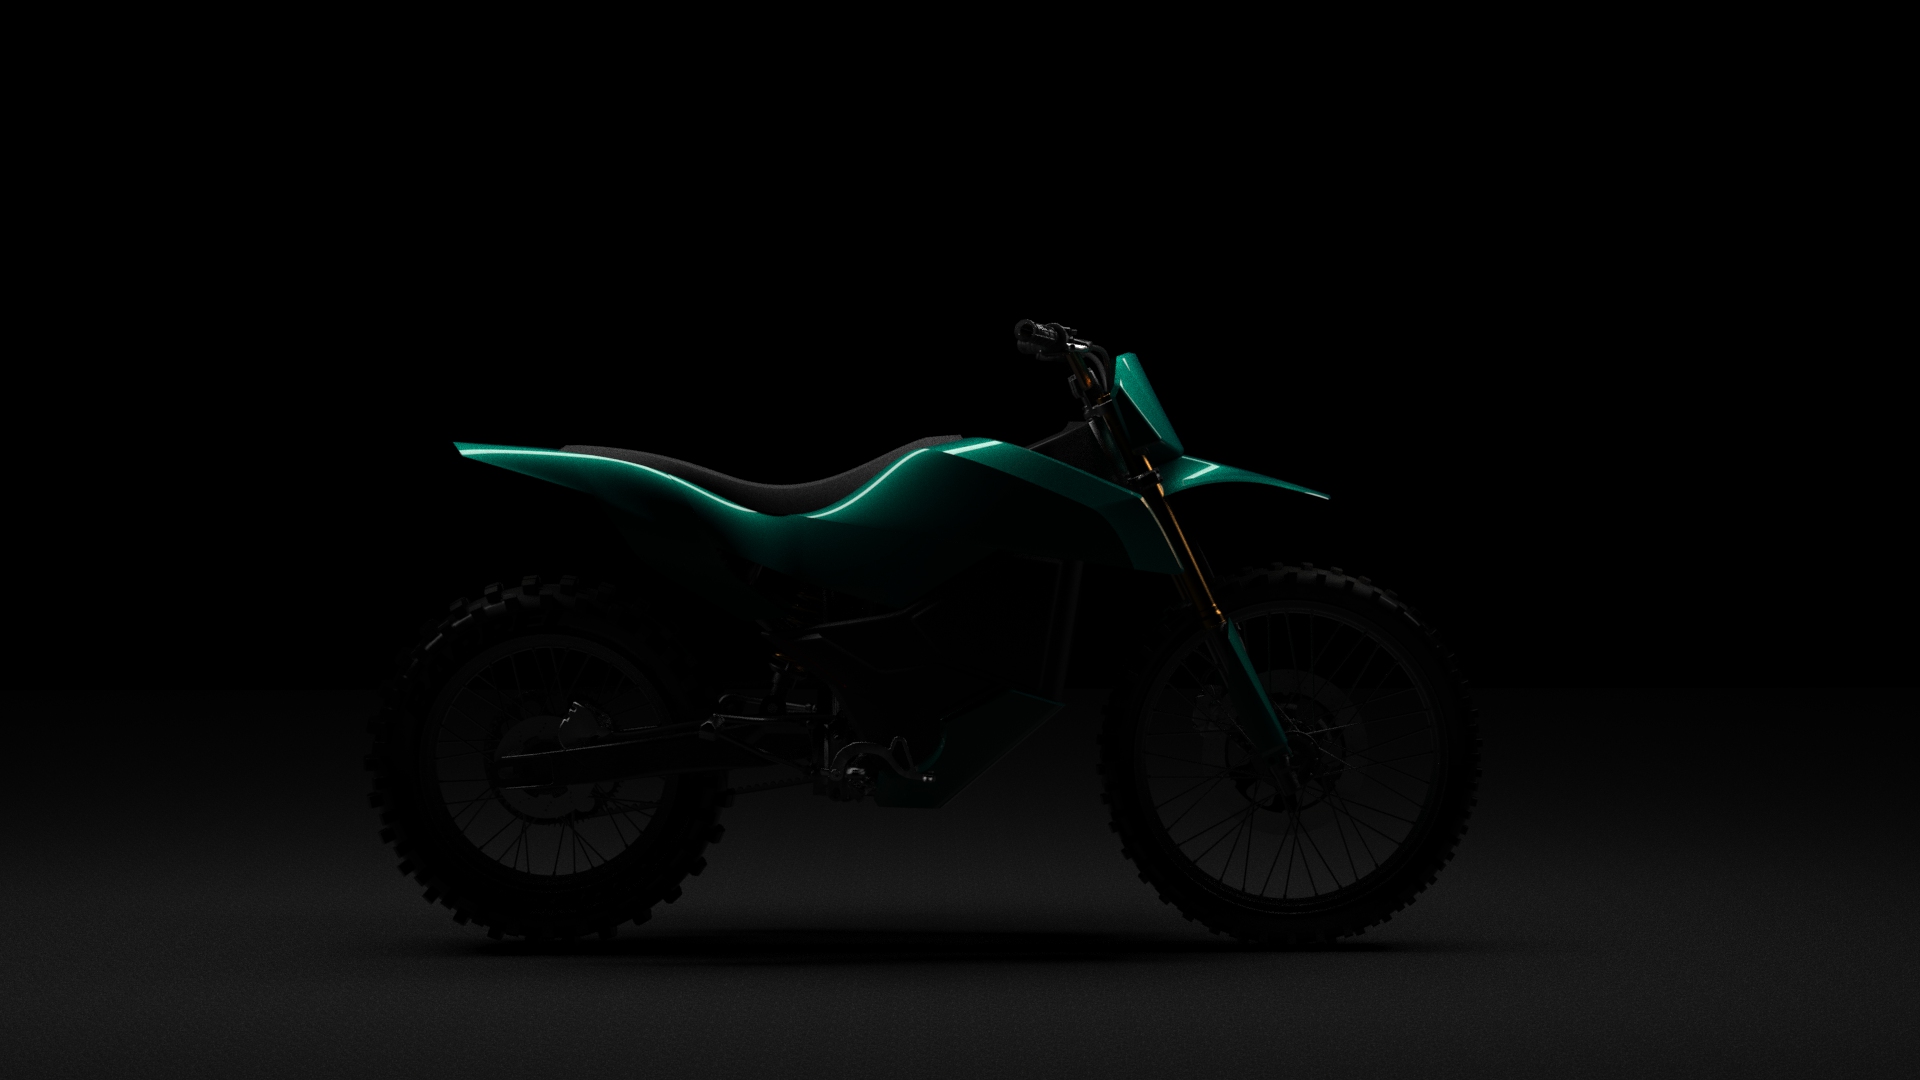 https://e-vehicleinfo.com/barrel-veloc-e-dual-sports-electric-motorcycle-launch/